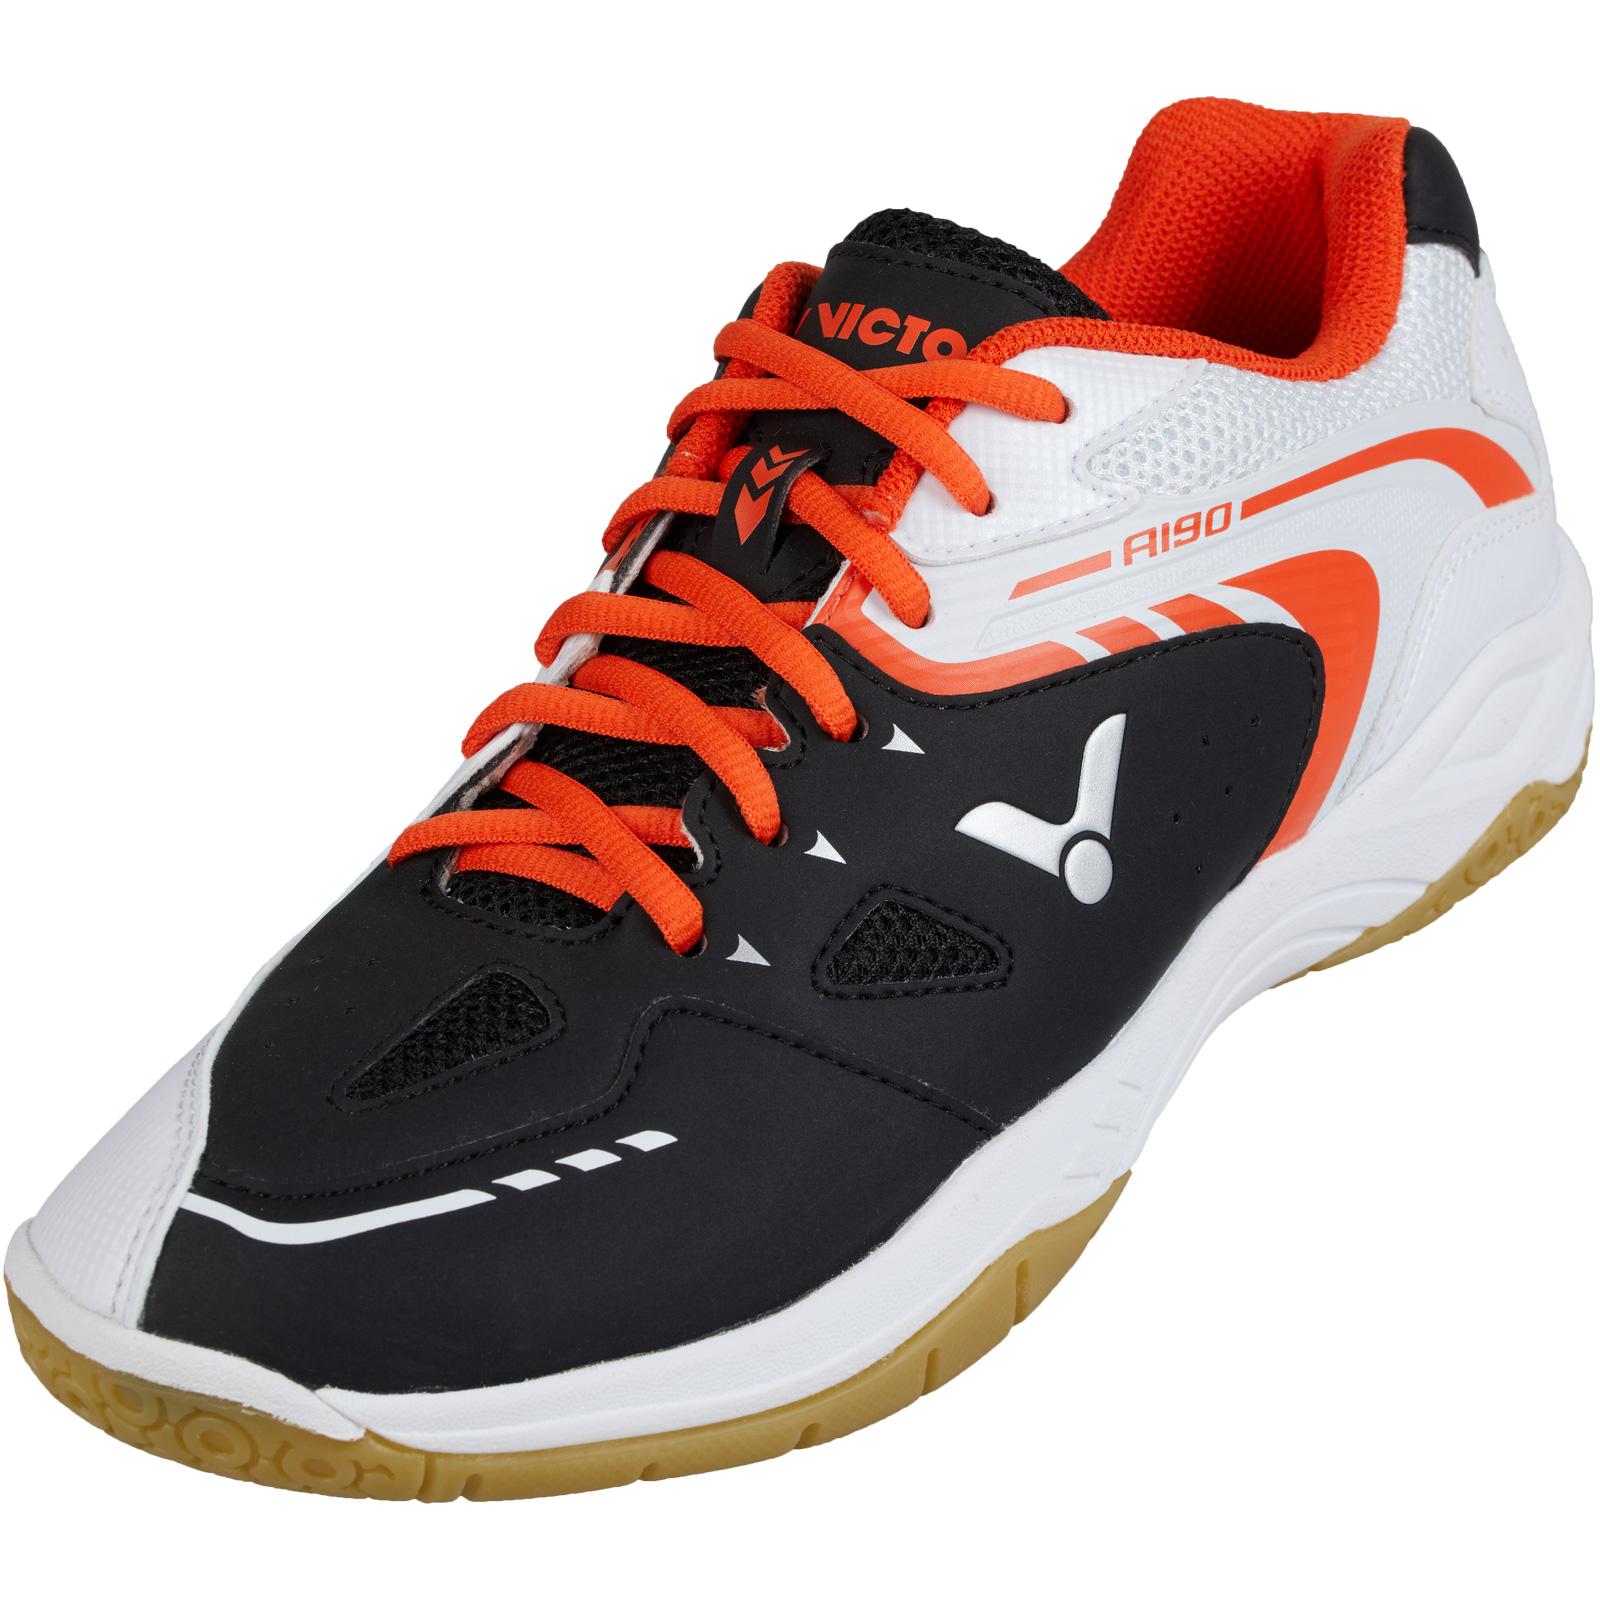 Victor Mens A190 Indoor Court Shoes - Black/White - Tennisnuts.com